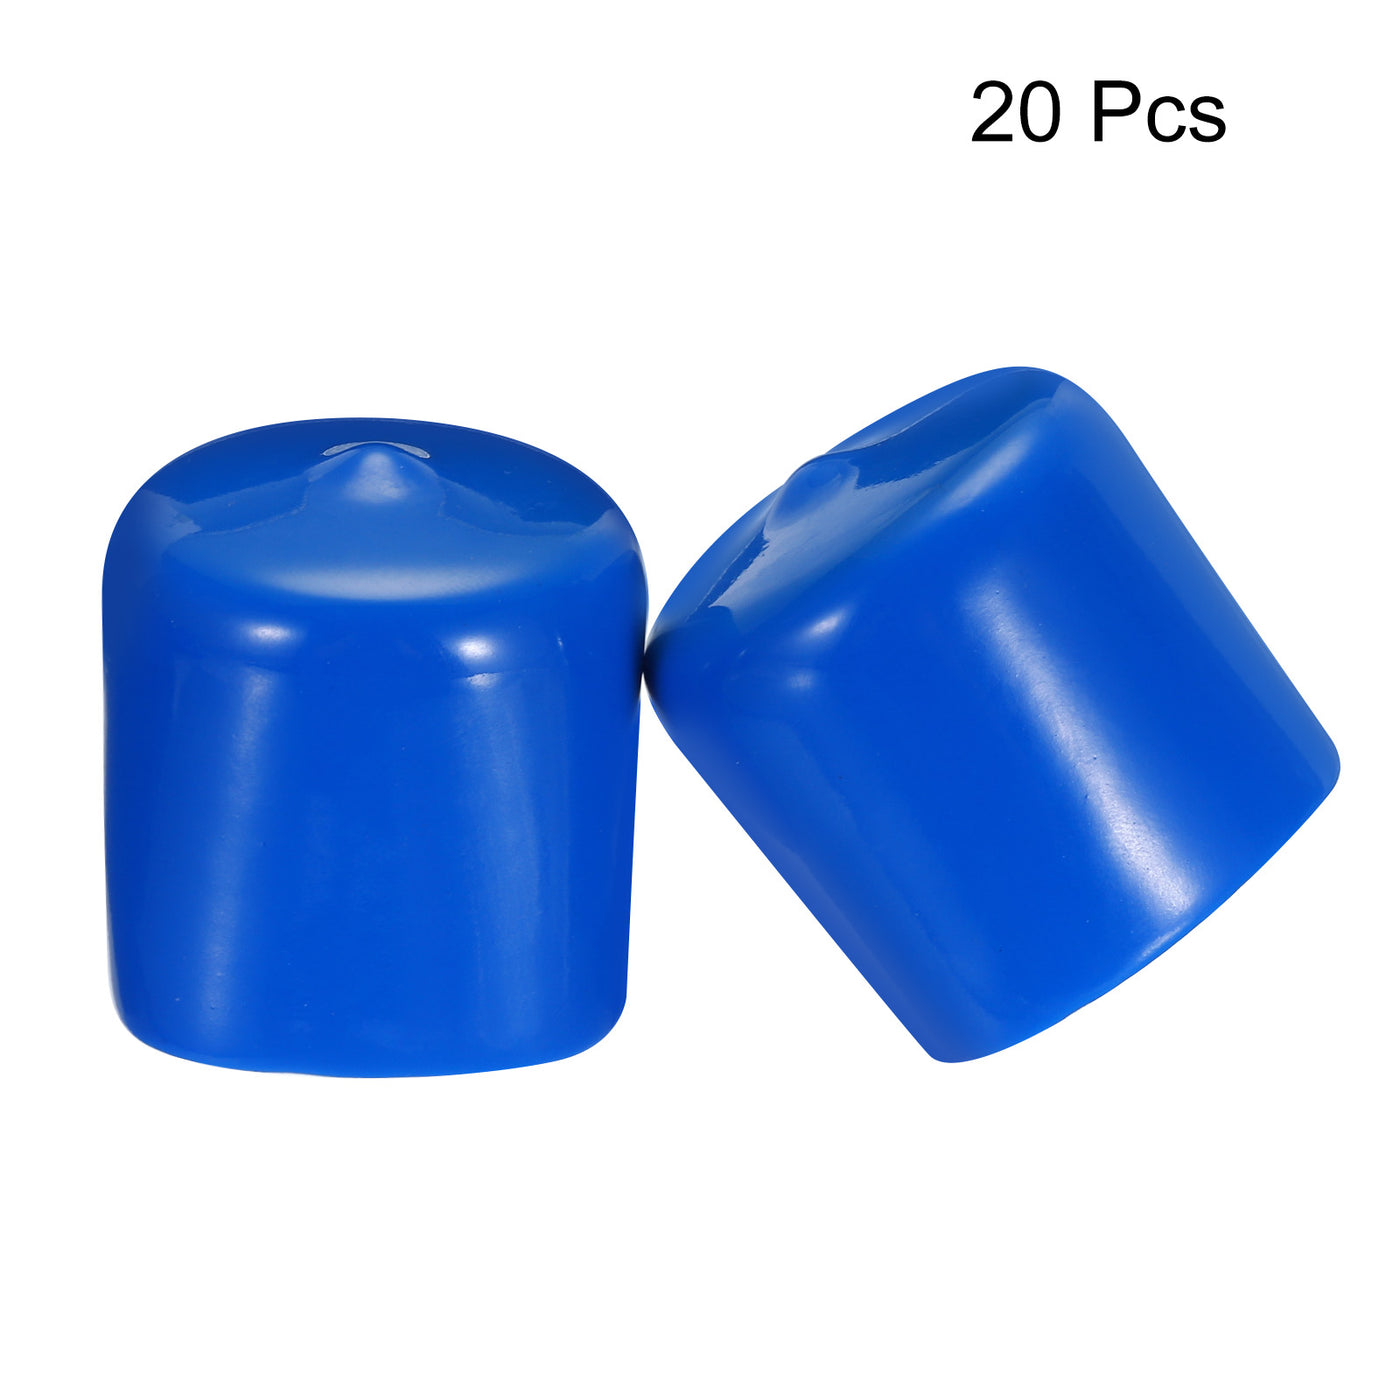 uxcell Uxcell 20pcs Rubber End Caps 36mm ID Vinyl PVC Round Tube Bolt Cap Cover Screw Thread Protectors Blue